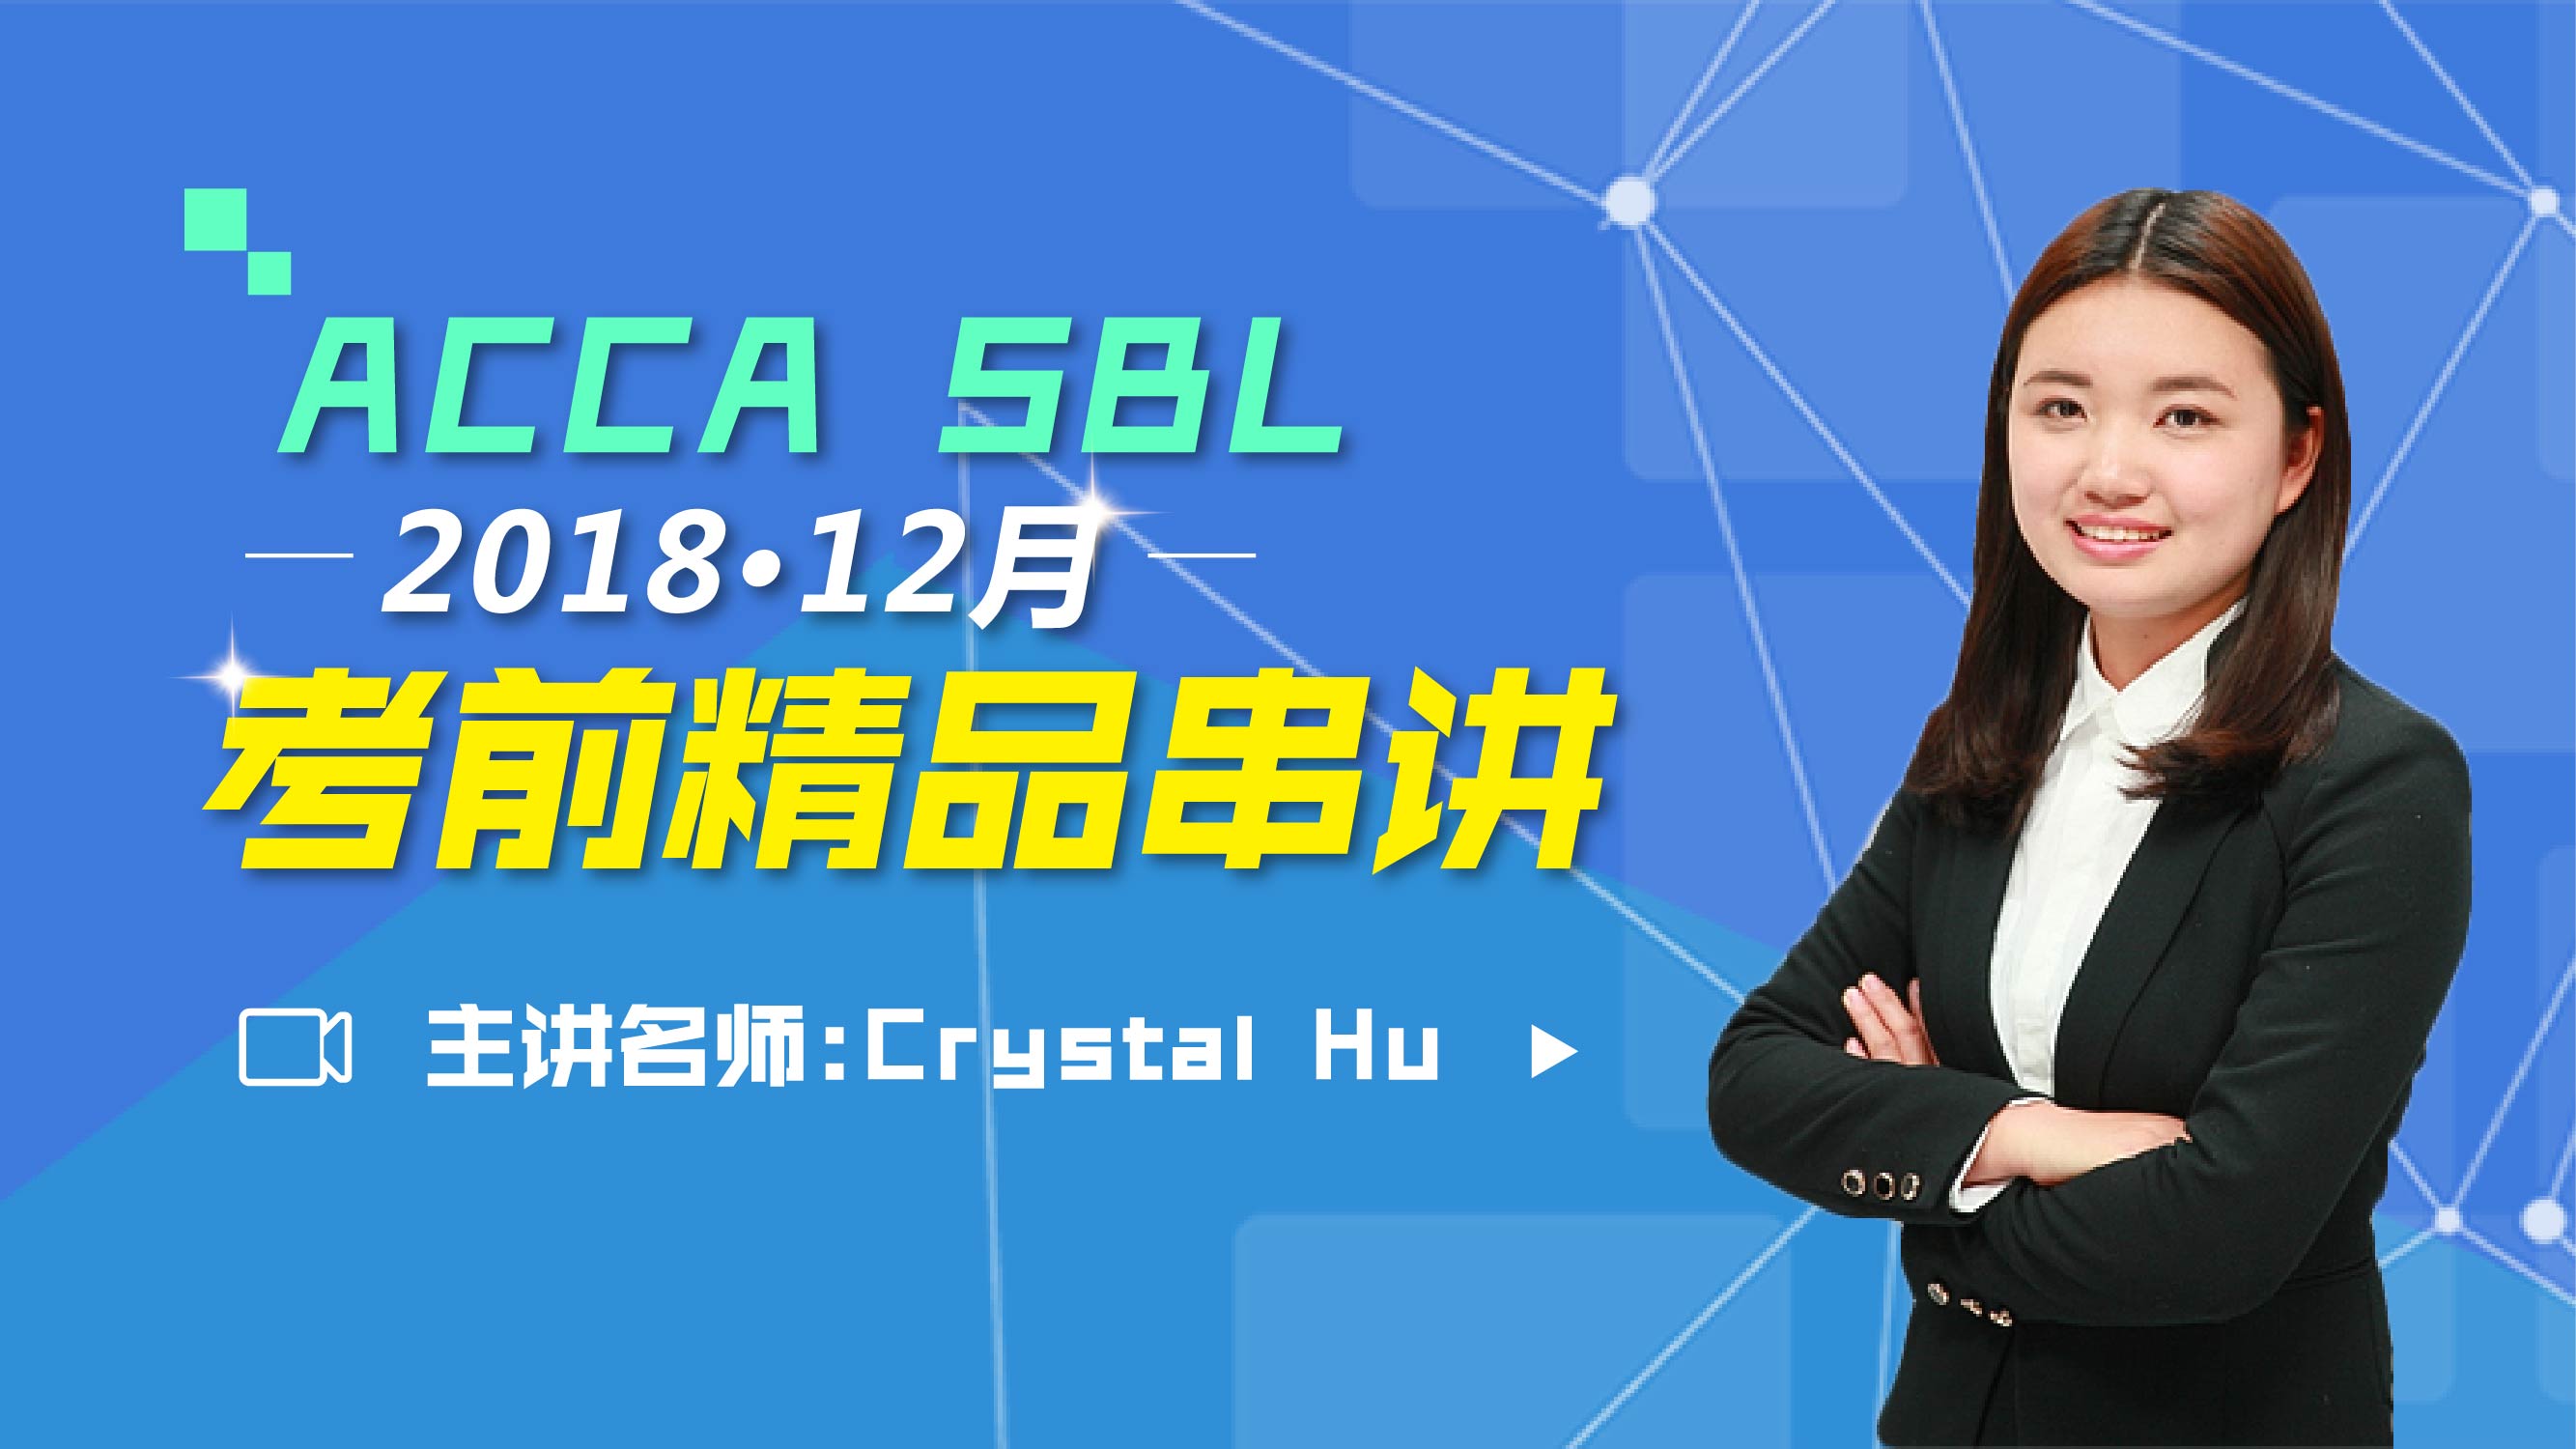 ACCA SBL 2018 12月考前精品串讲 Crystal